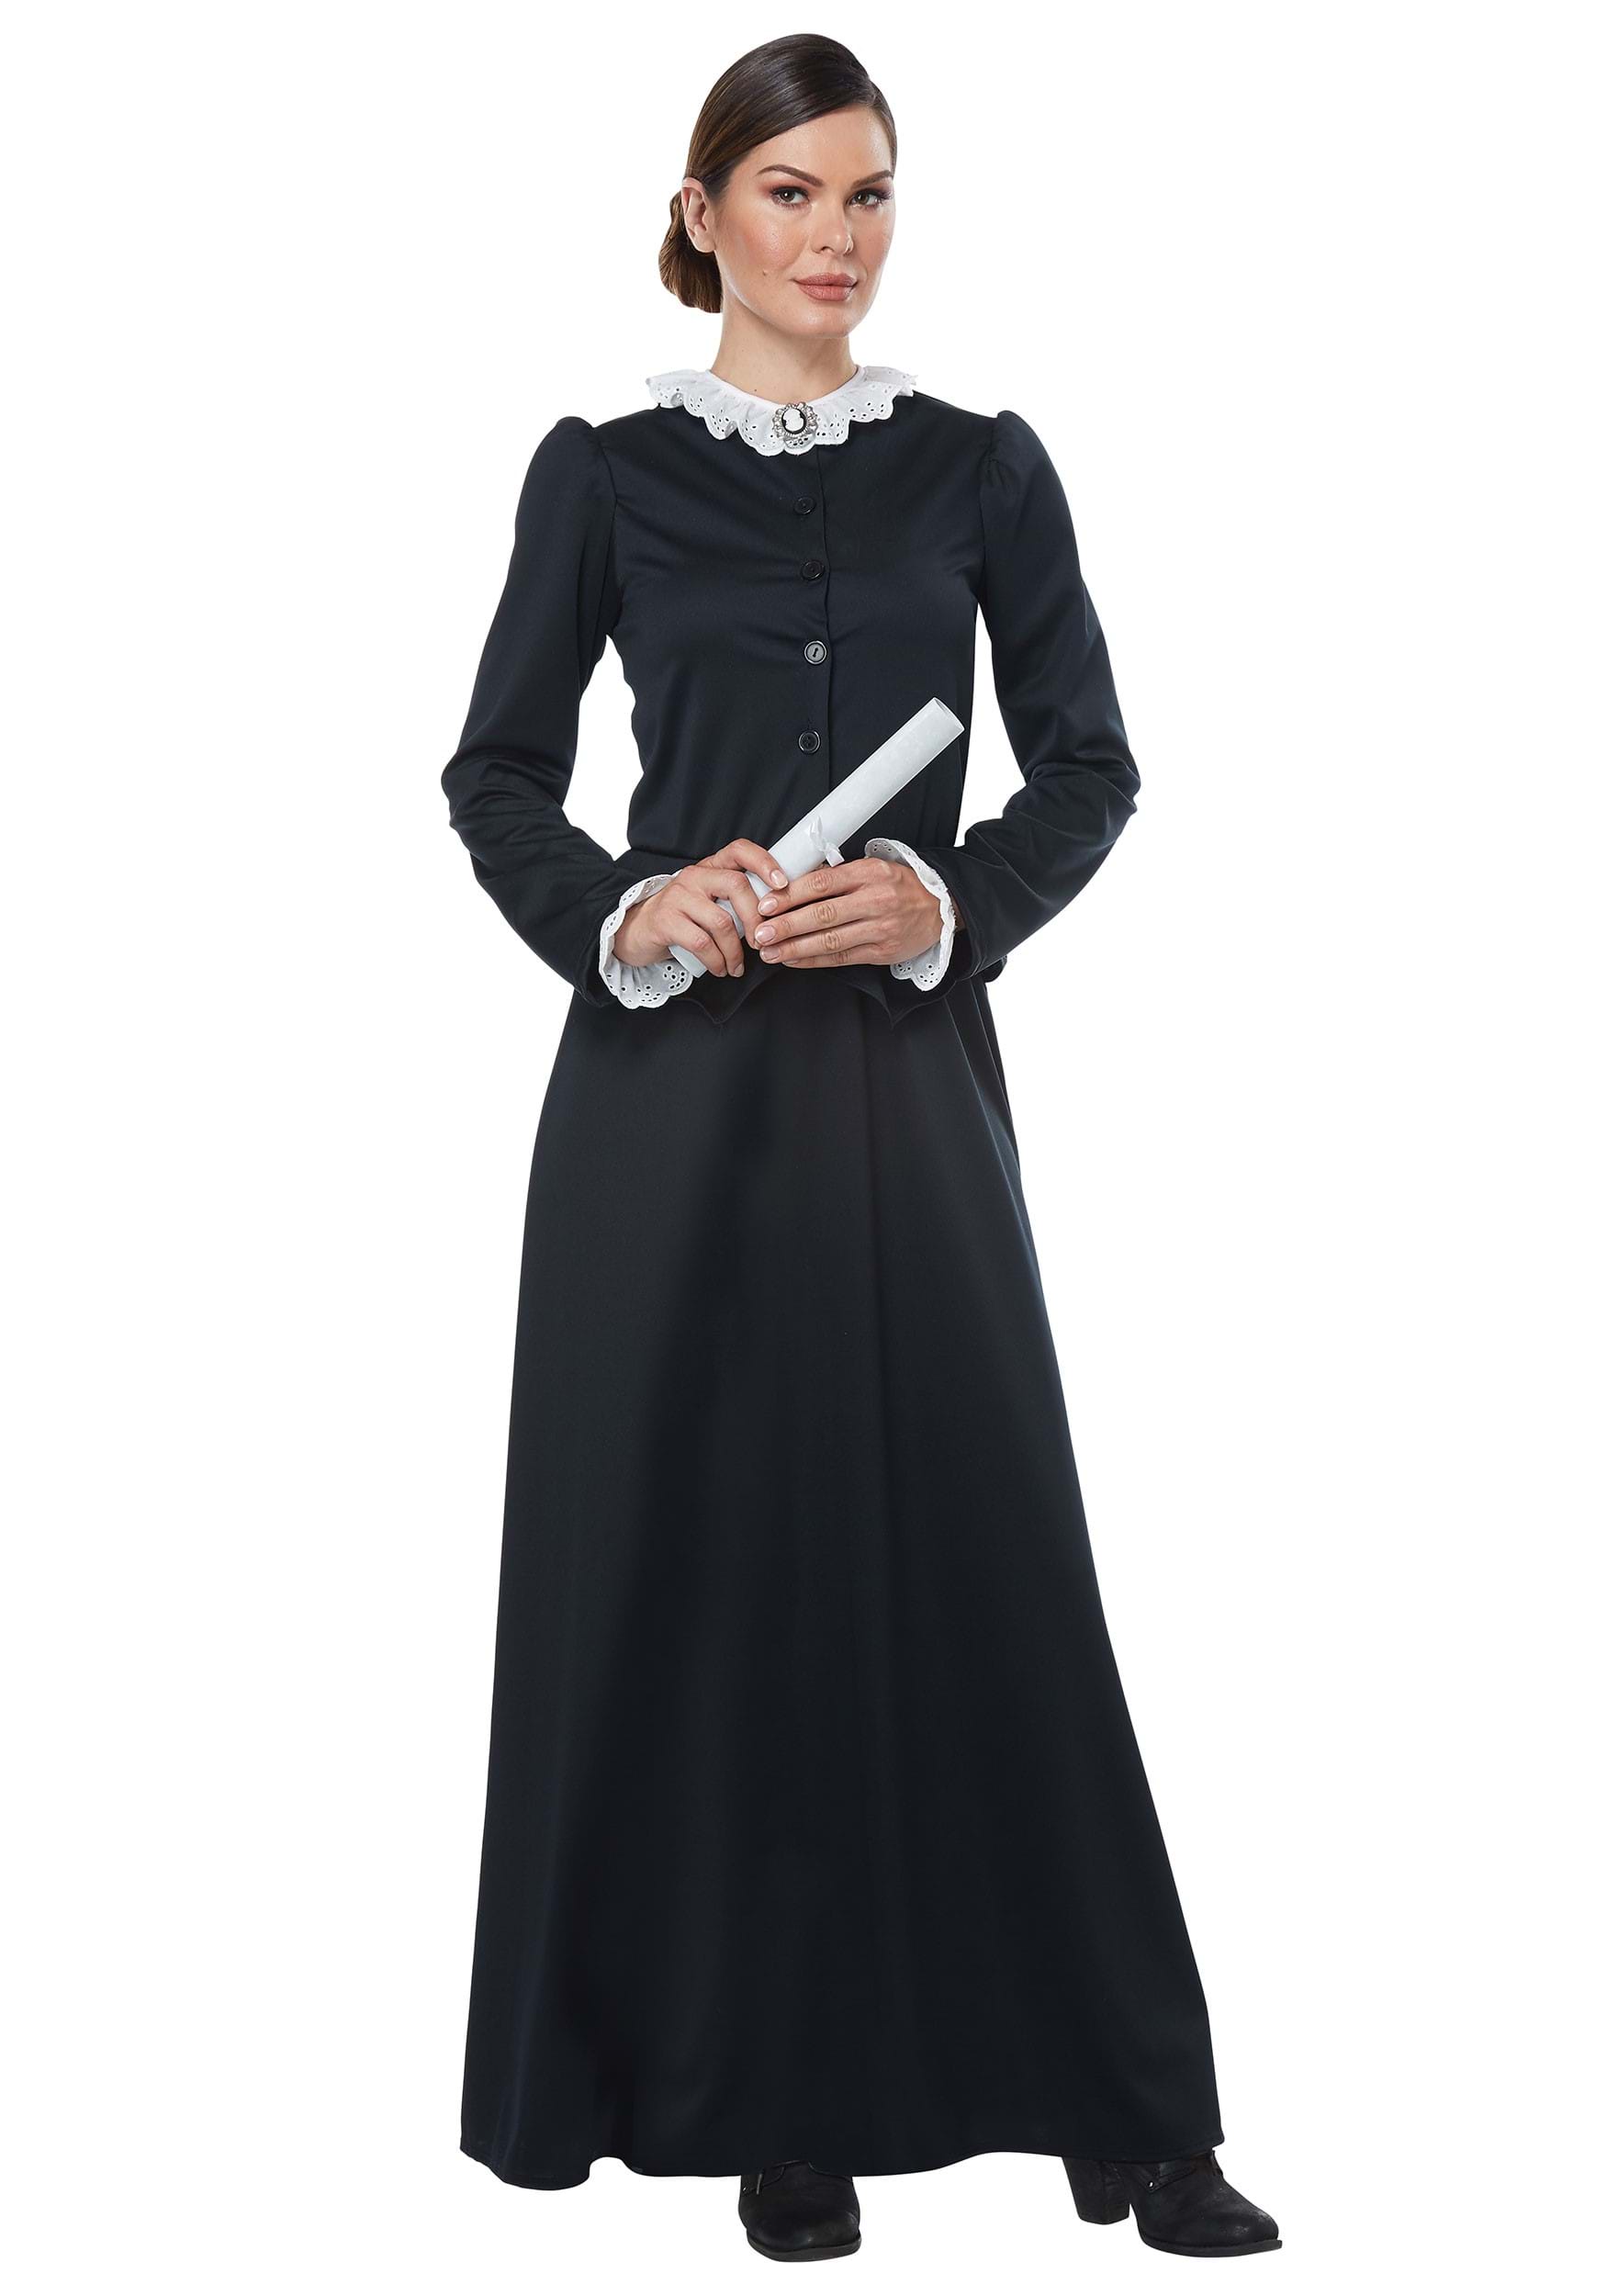 Susan B. Anthony / Harriet Tubman Women's Costume